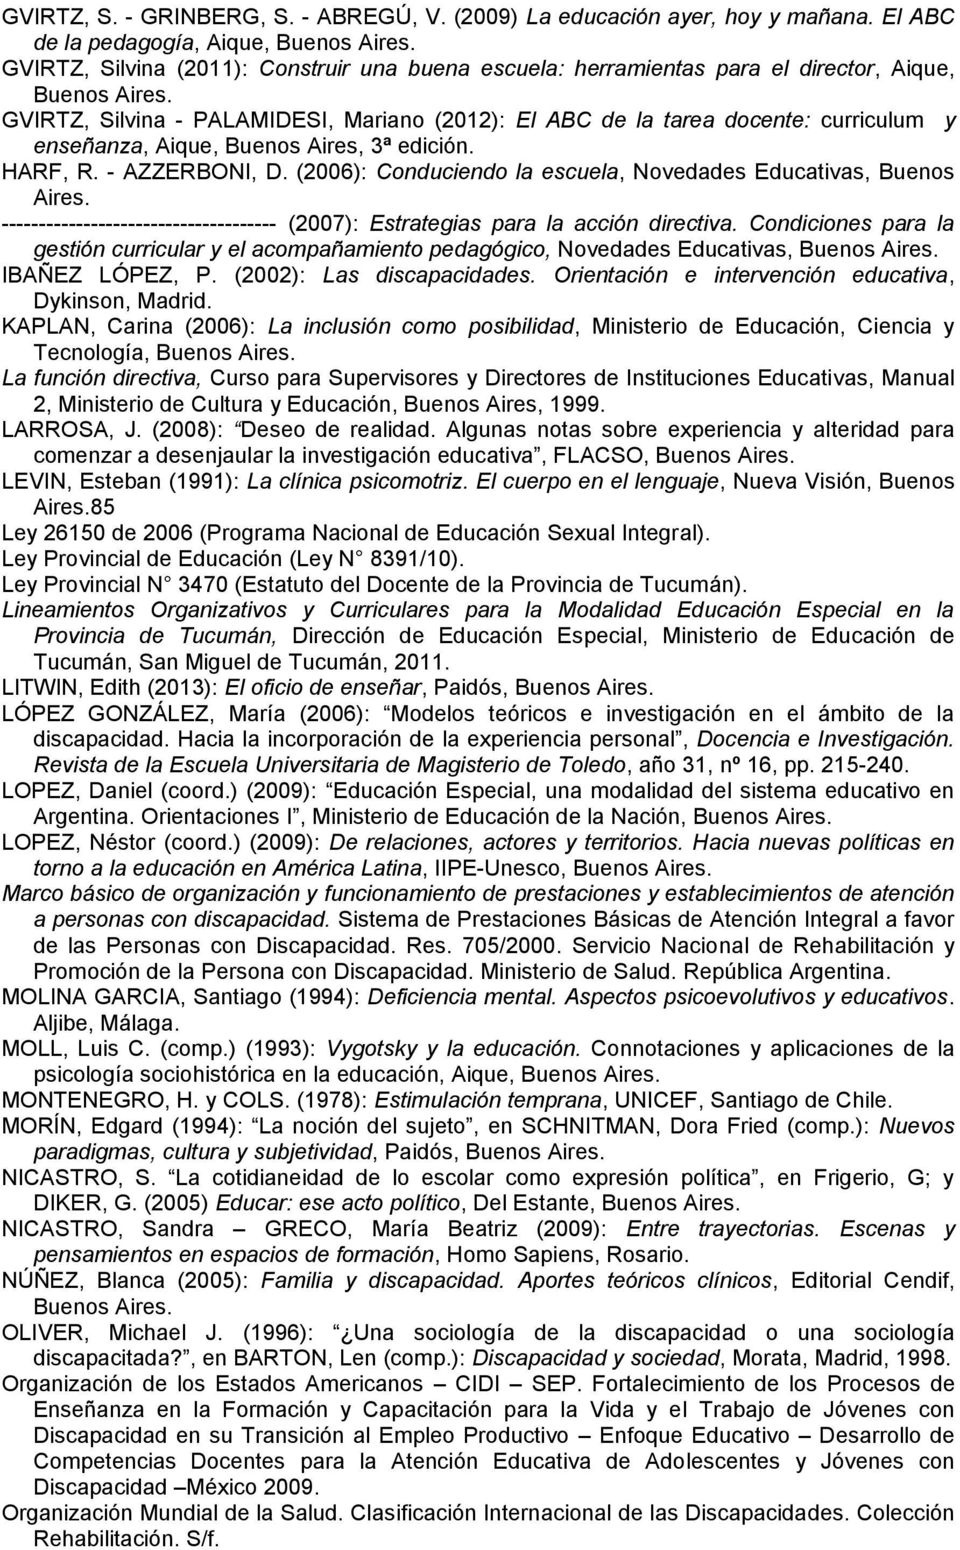 curriculum y enseñanza, Aique, Buenos Aires, 3ª edición. HARF, R. - AZZERBONI, D.